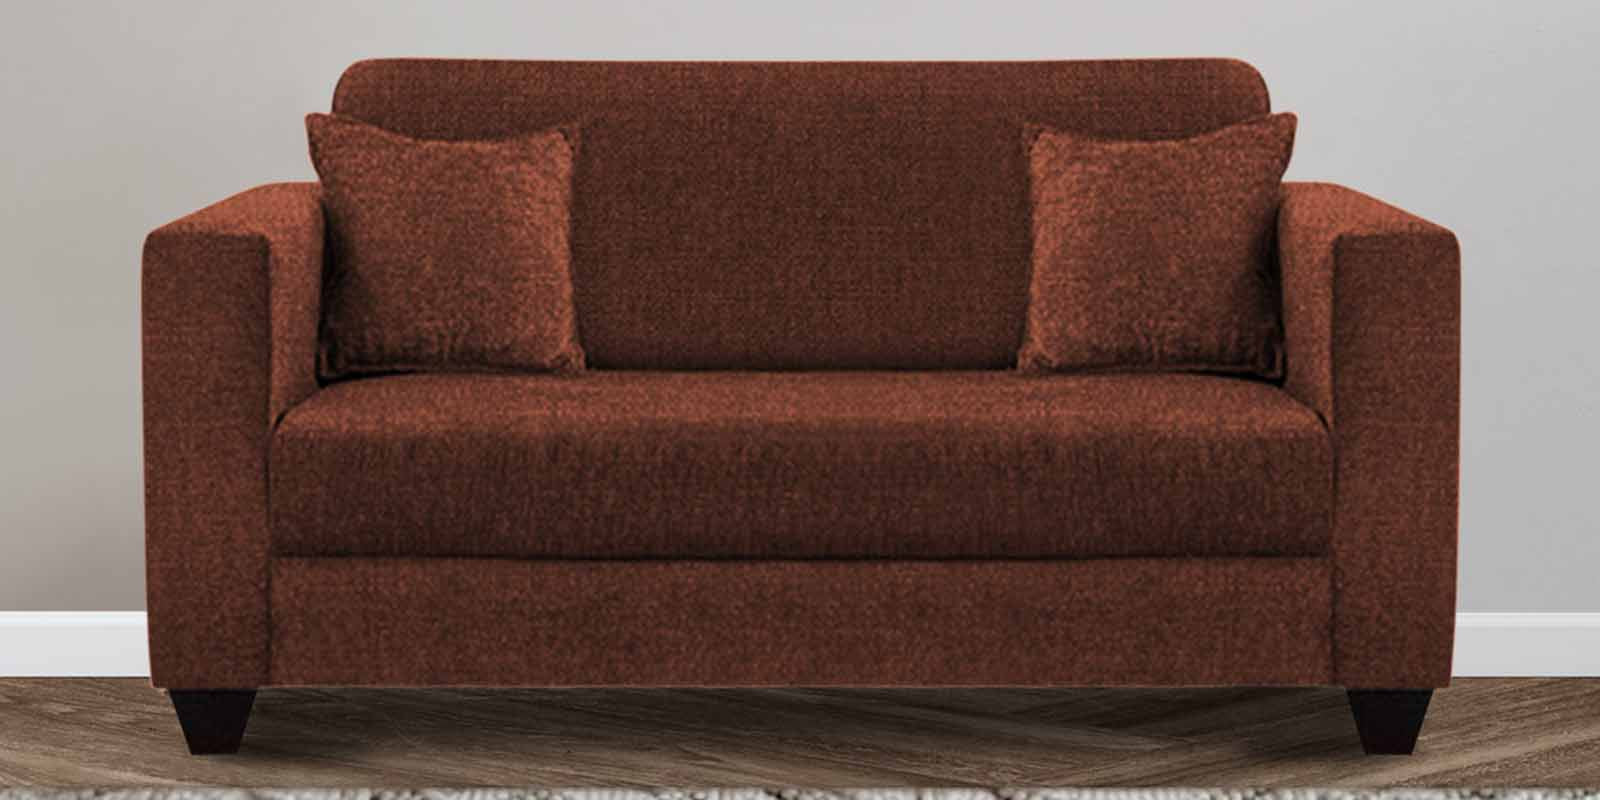 Nebula Fabric 2 Seater Sofa in Coffee Brown Colour